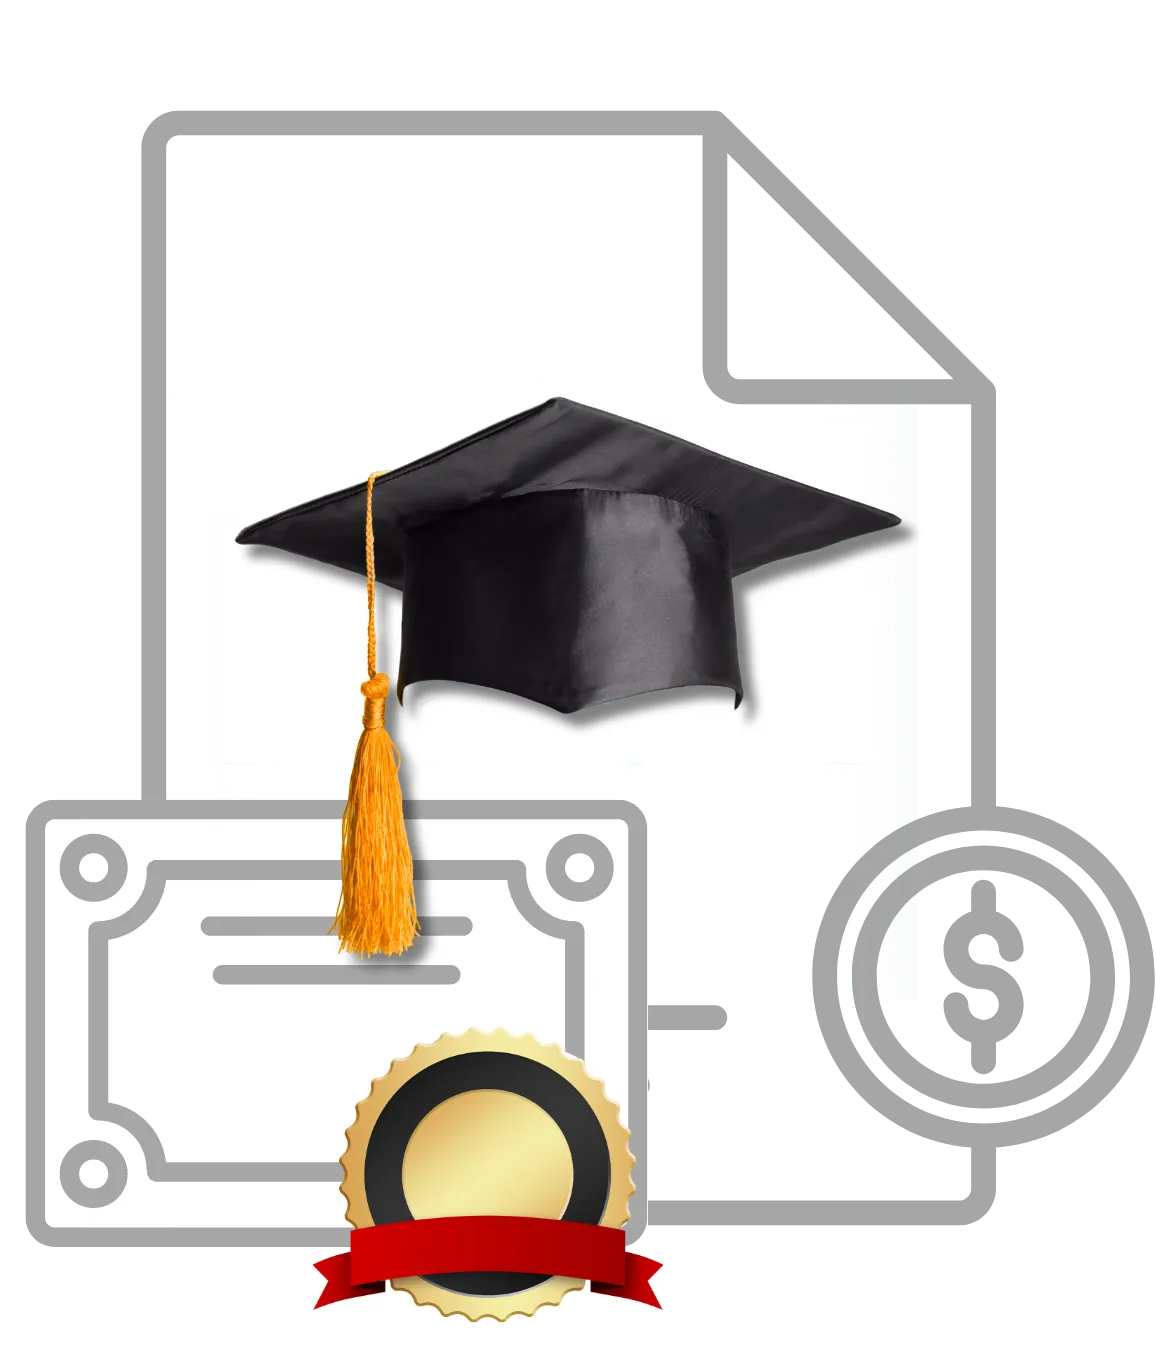 graduate cap and diploma